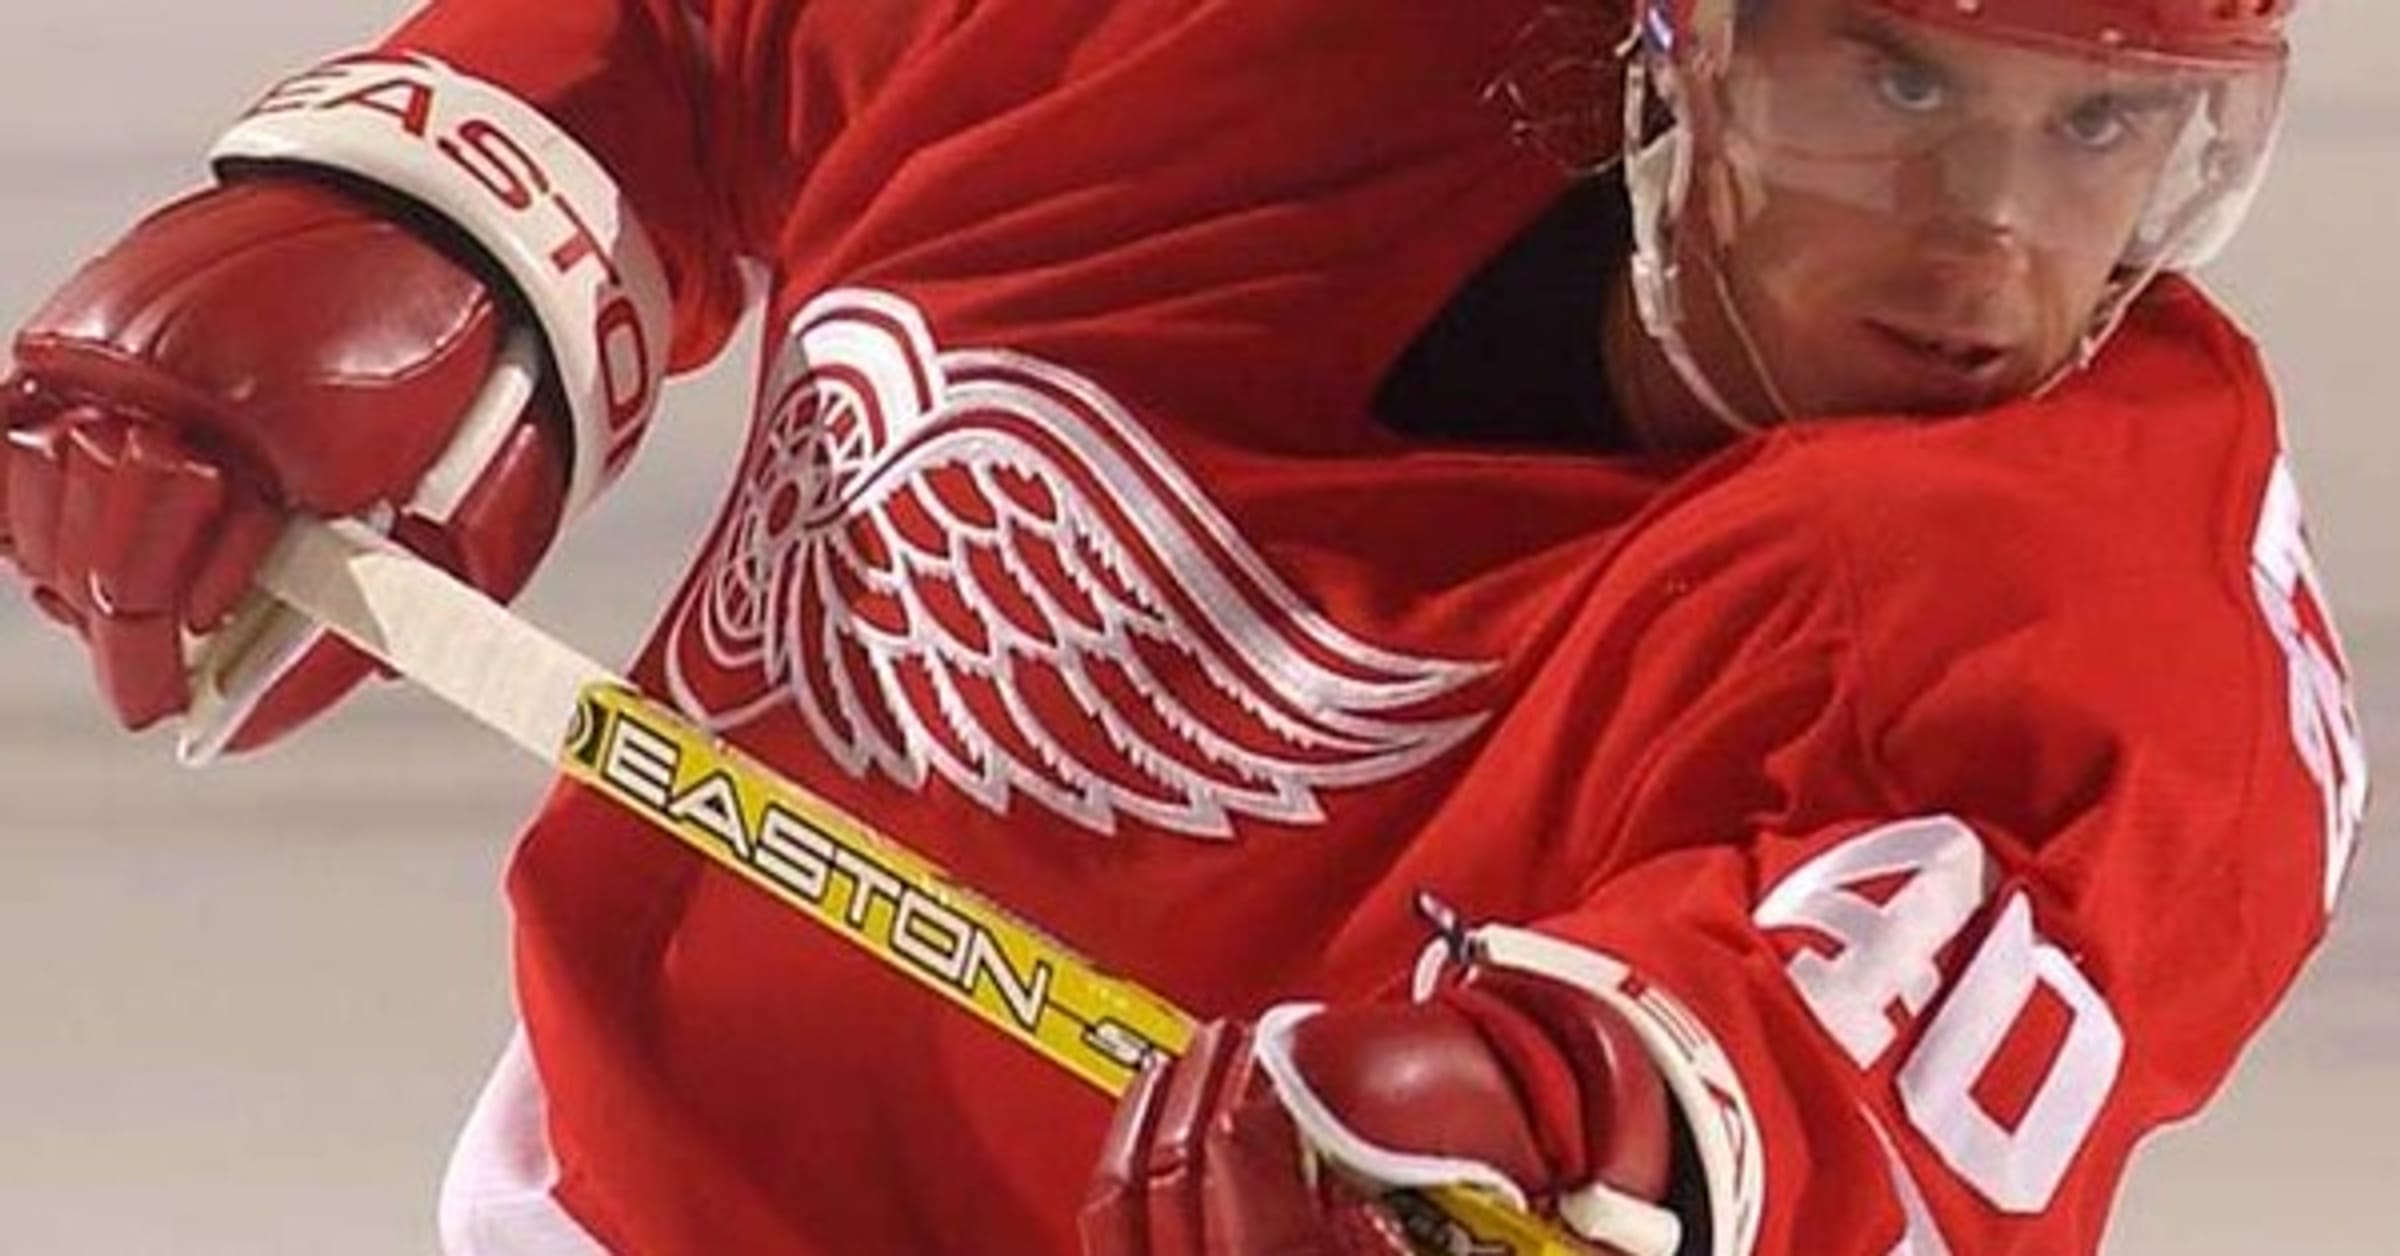 Red Wings hire franchise legend Nicklas Lidstrom as VP of hockey